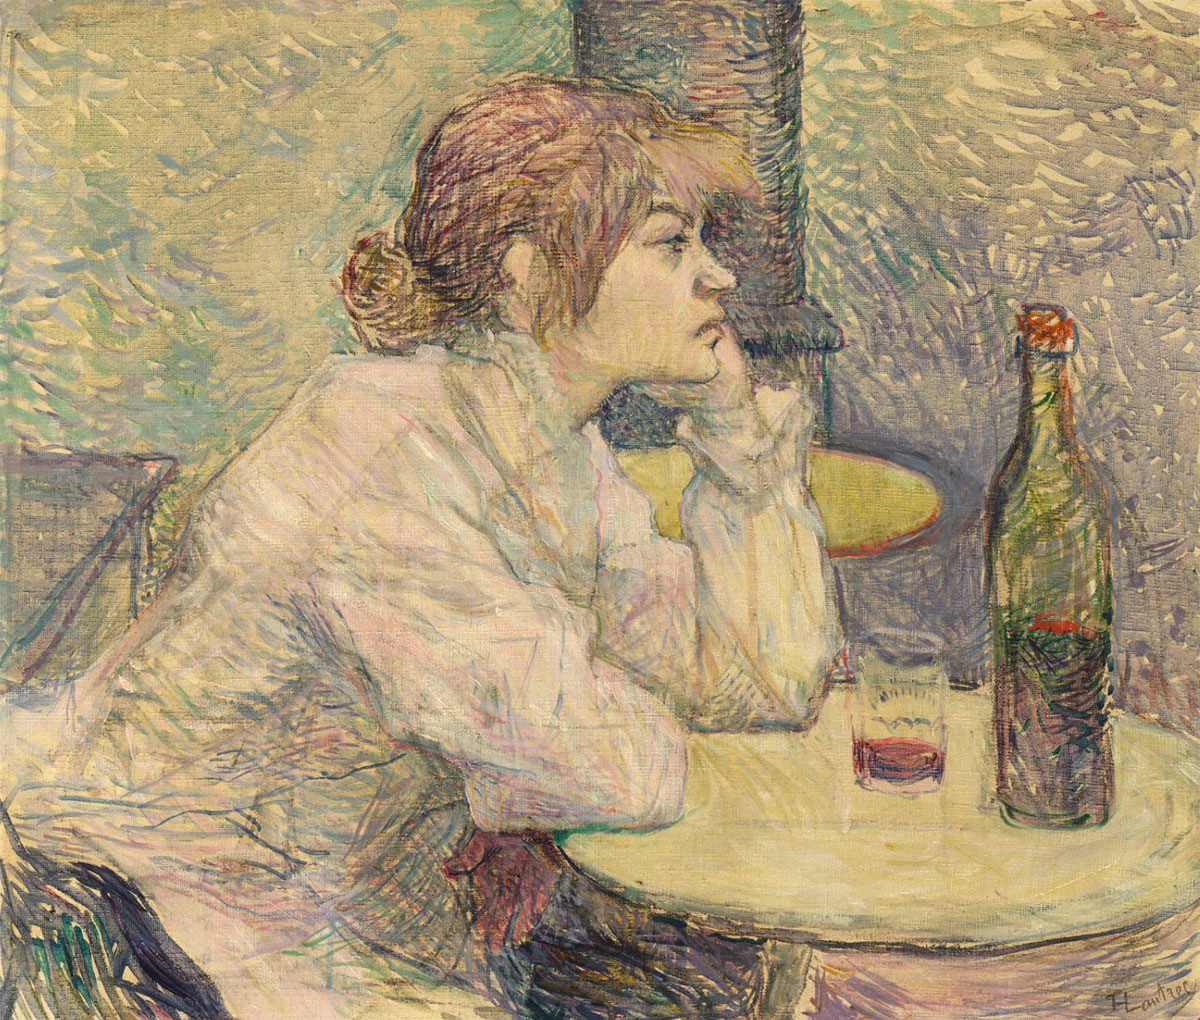 La bevitrice - Suzanne Valadon - Hangover - The Drinker - Toulouse Lautrec